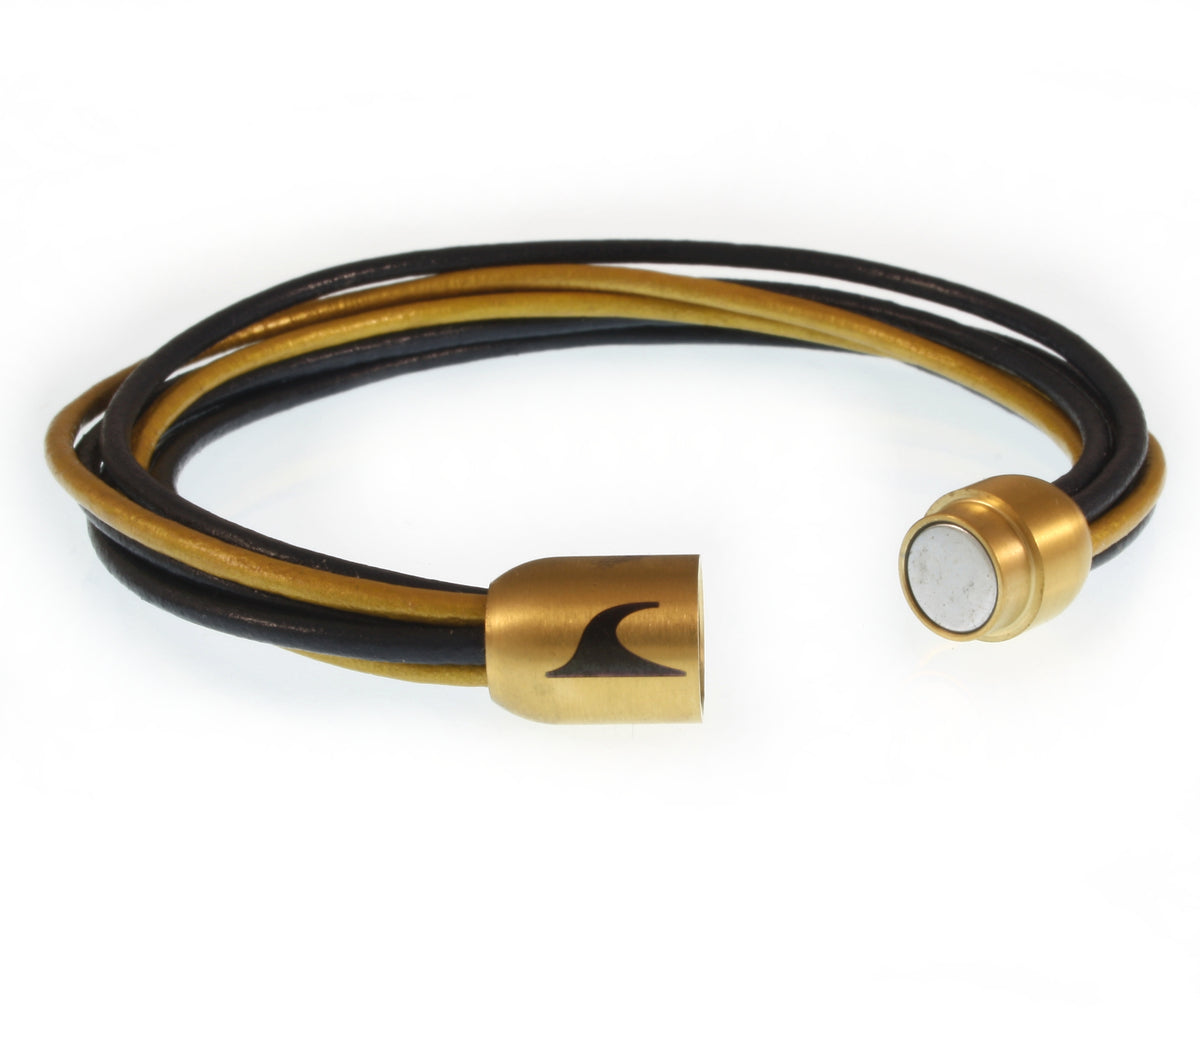 Damen-Leder-armband-fem-marine-gold-Edelstahlverschluss-offen-wavepirate-shop-r